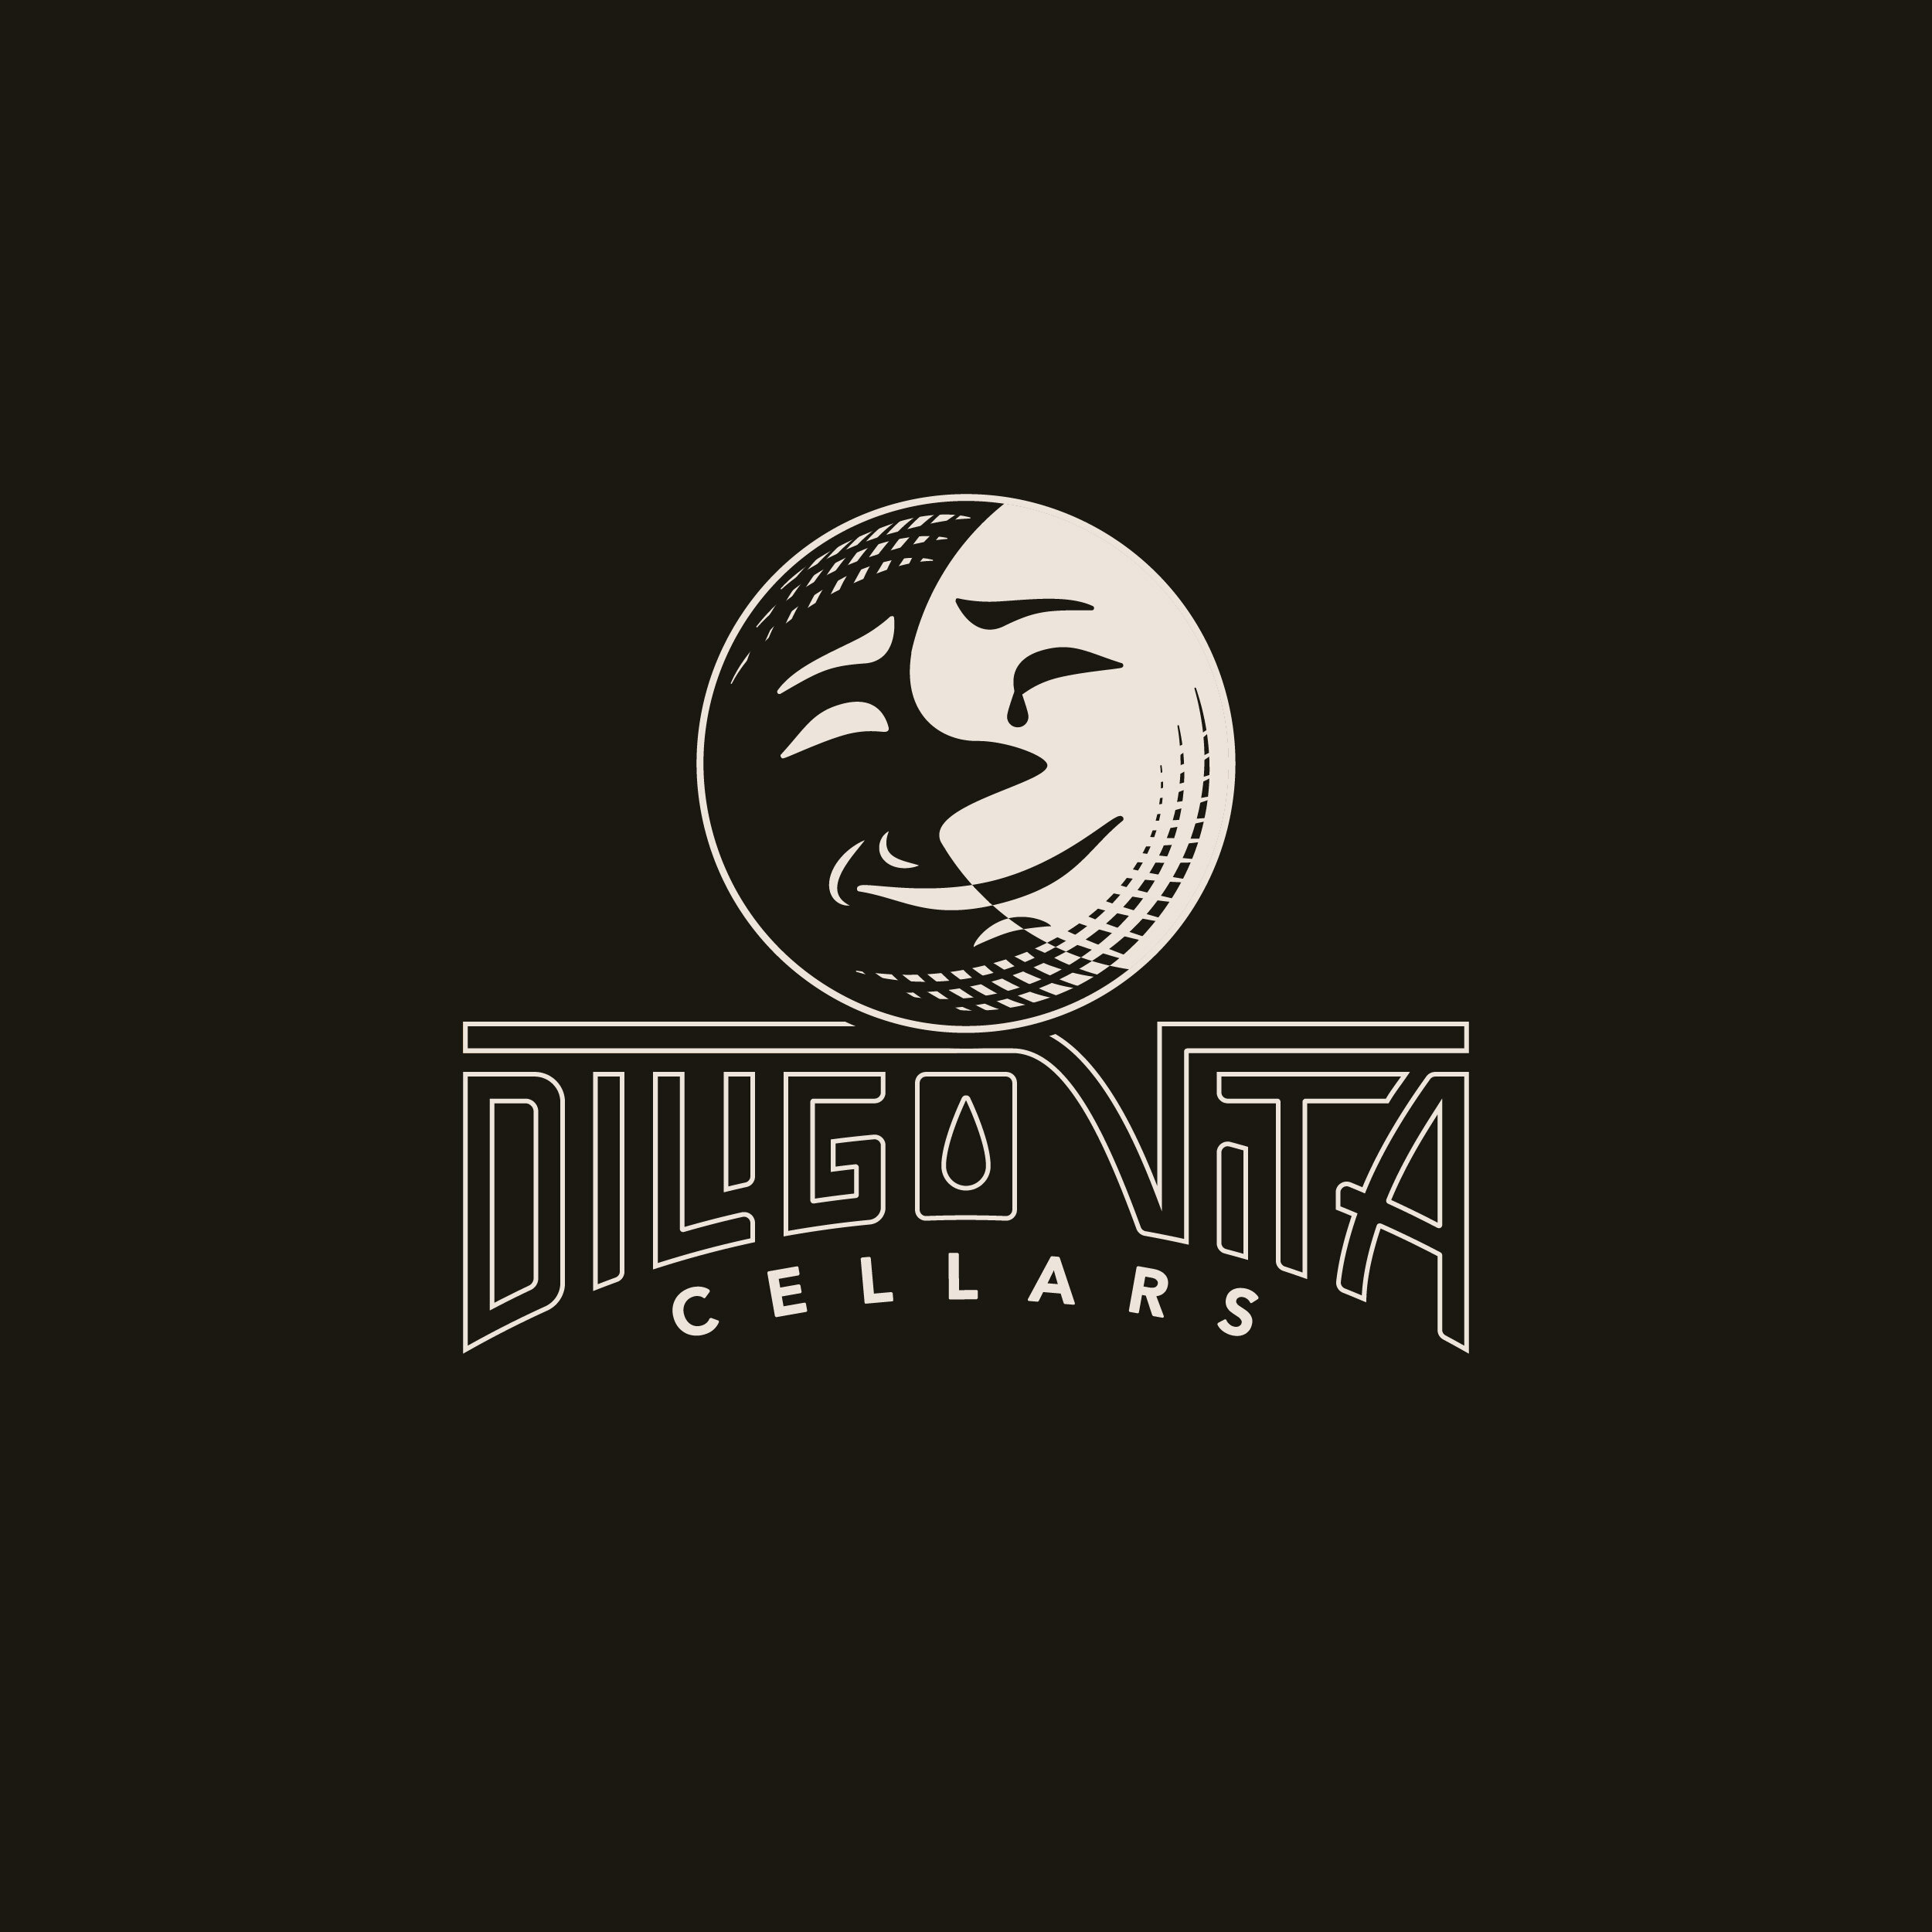 DiligoVita-Spirits-Branding_Thumbnail-Dark.jpg